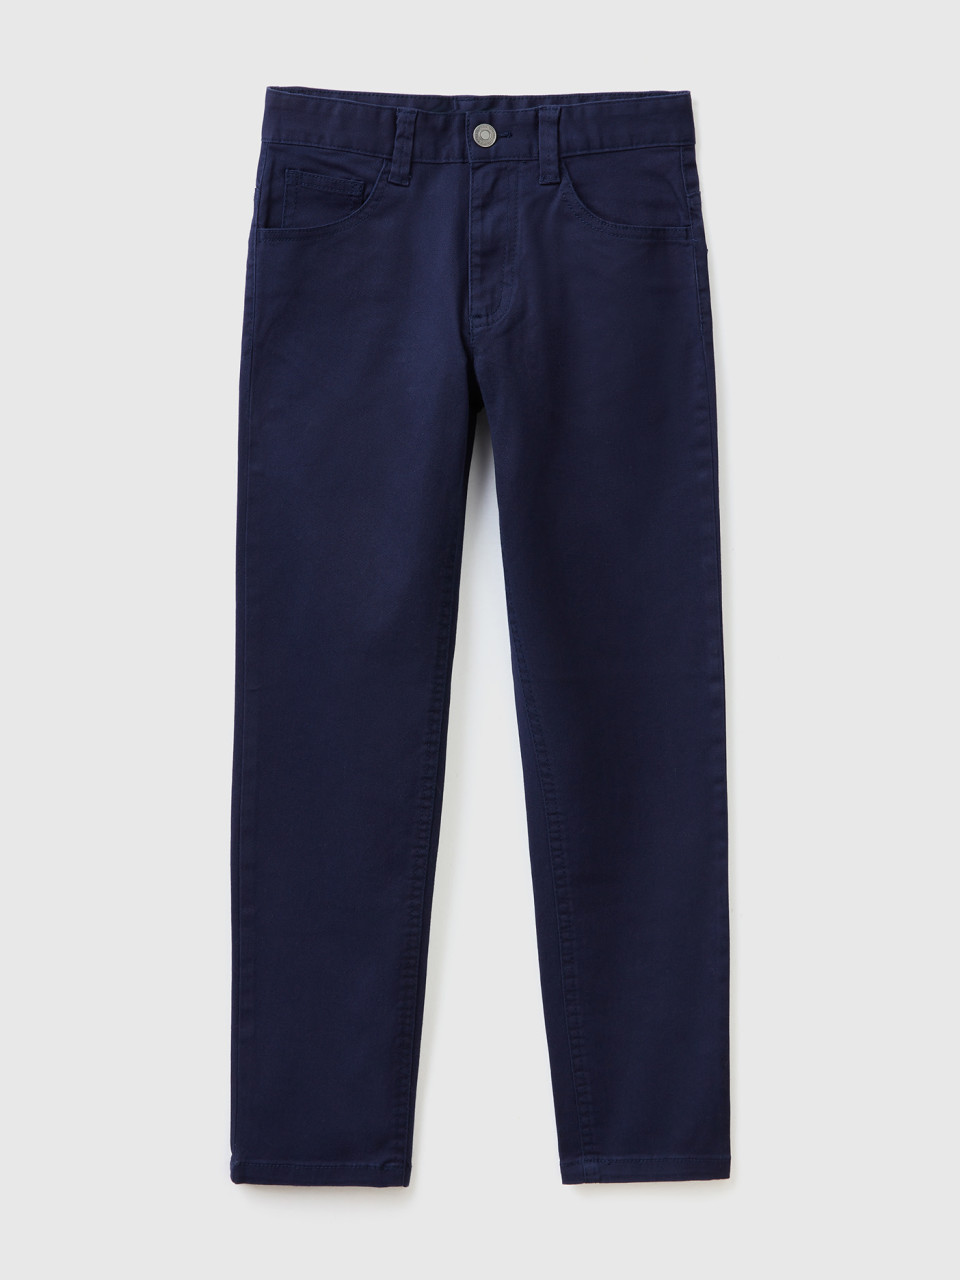 Benetton, Five Pocket Slim Fit Trousers, Dark Blue, Kids